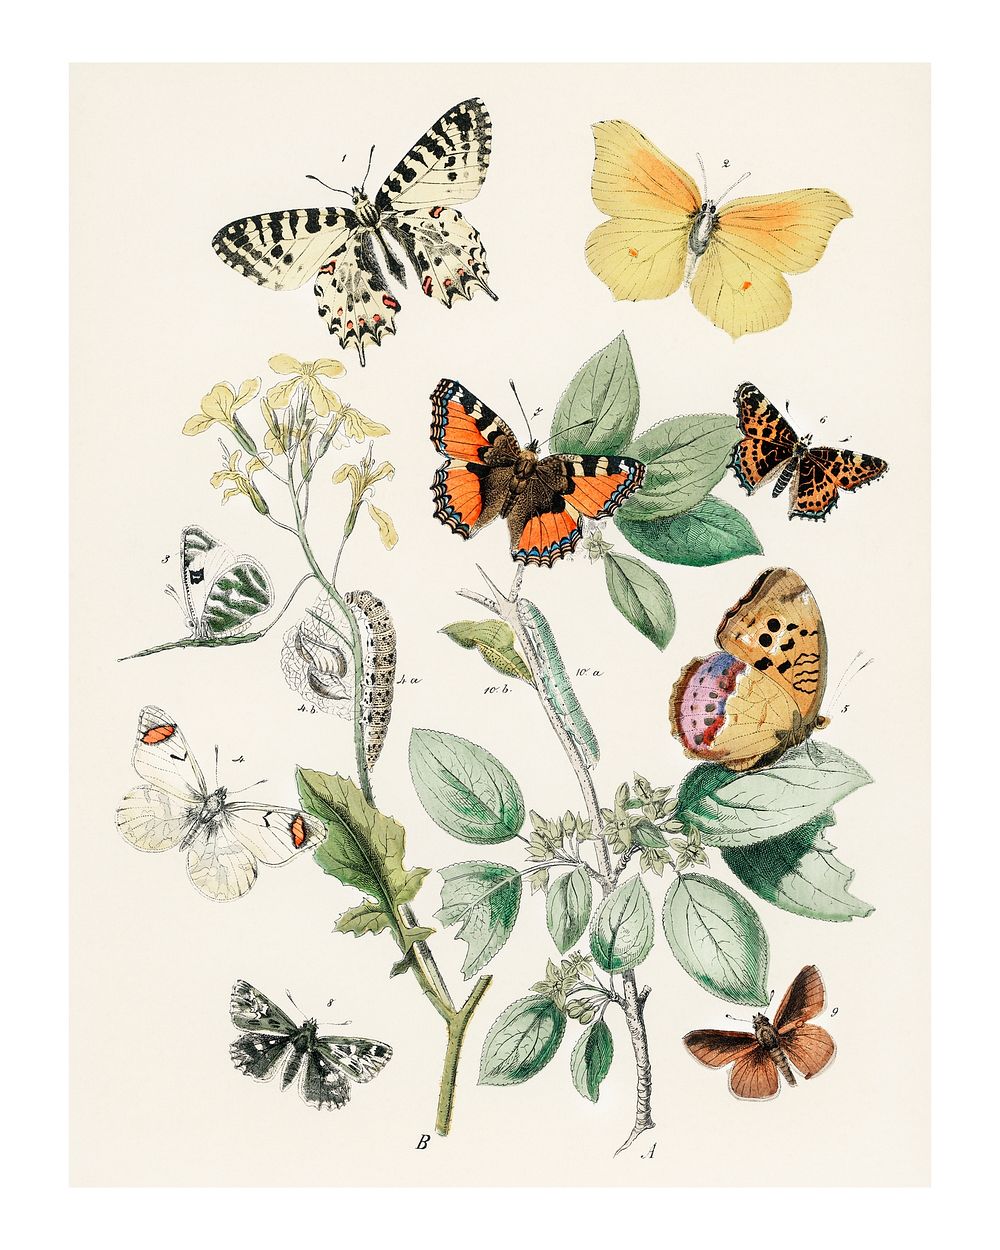 Fluttering butterflies and caterpillars vintage illustration wall art print and poster design remix from original artwork. 